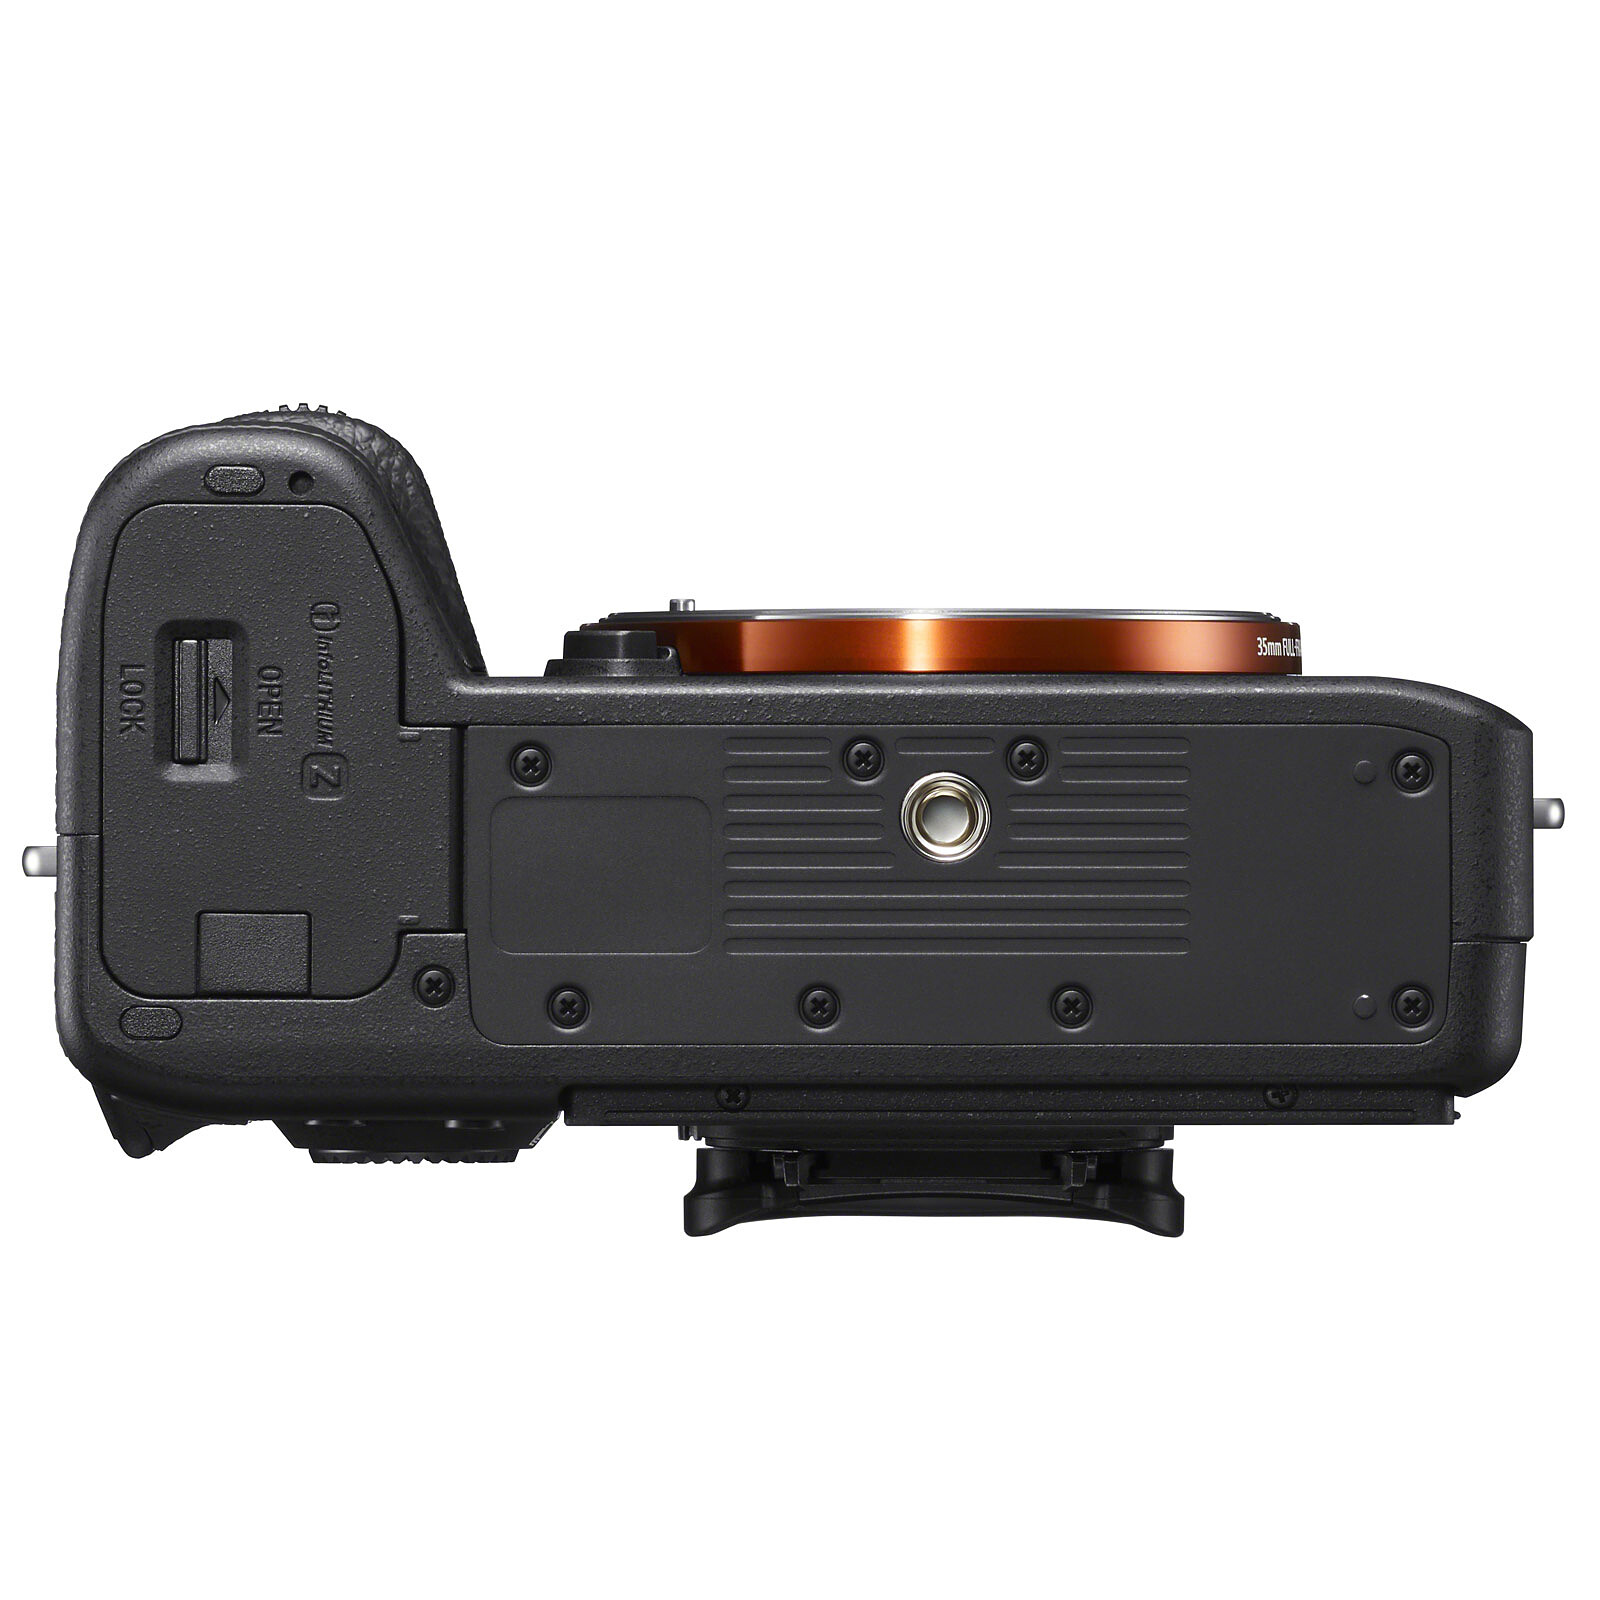 Sony Alpha 7 III - camera on LDLC